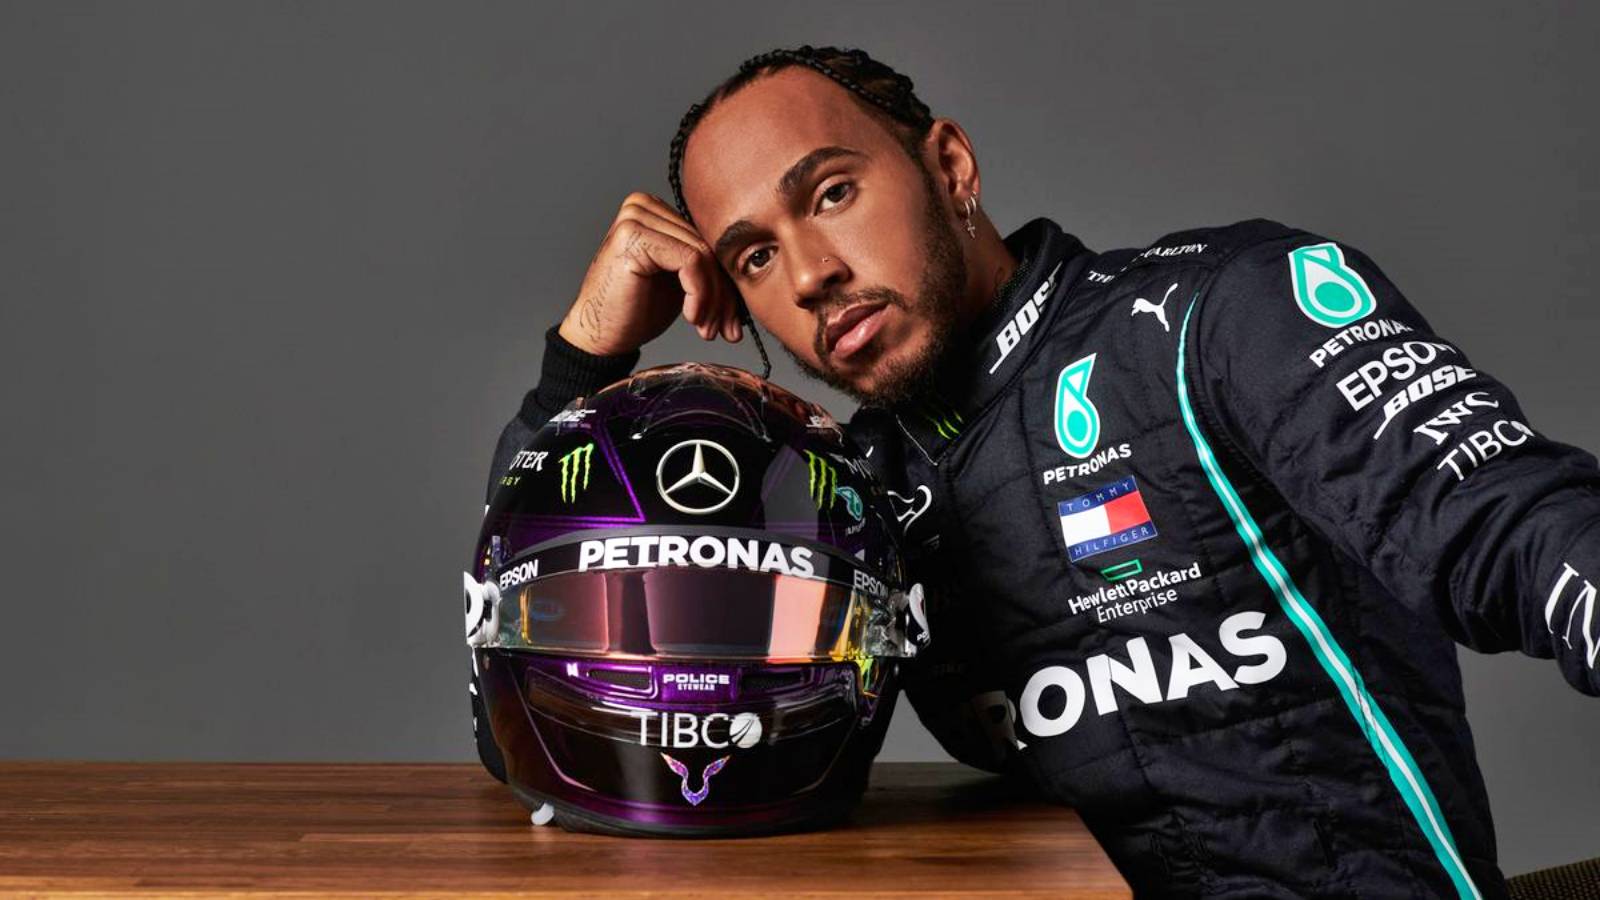 Offizielle Ankündigung der Formel 1 LAST MINUTE Mercedes Lewis Hamilton Racing